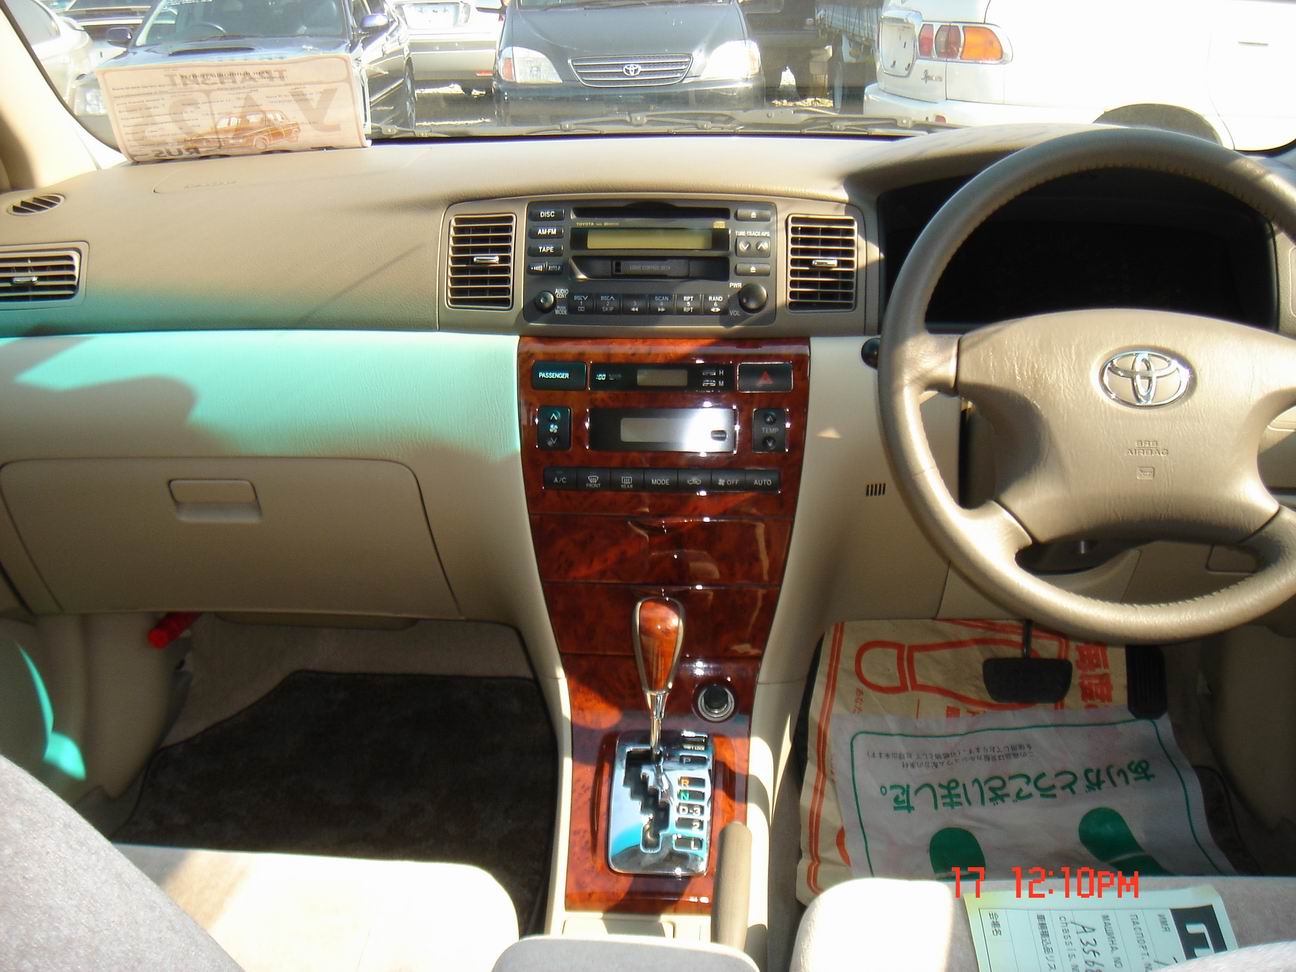 2000 Toyota Corolla Images